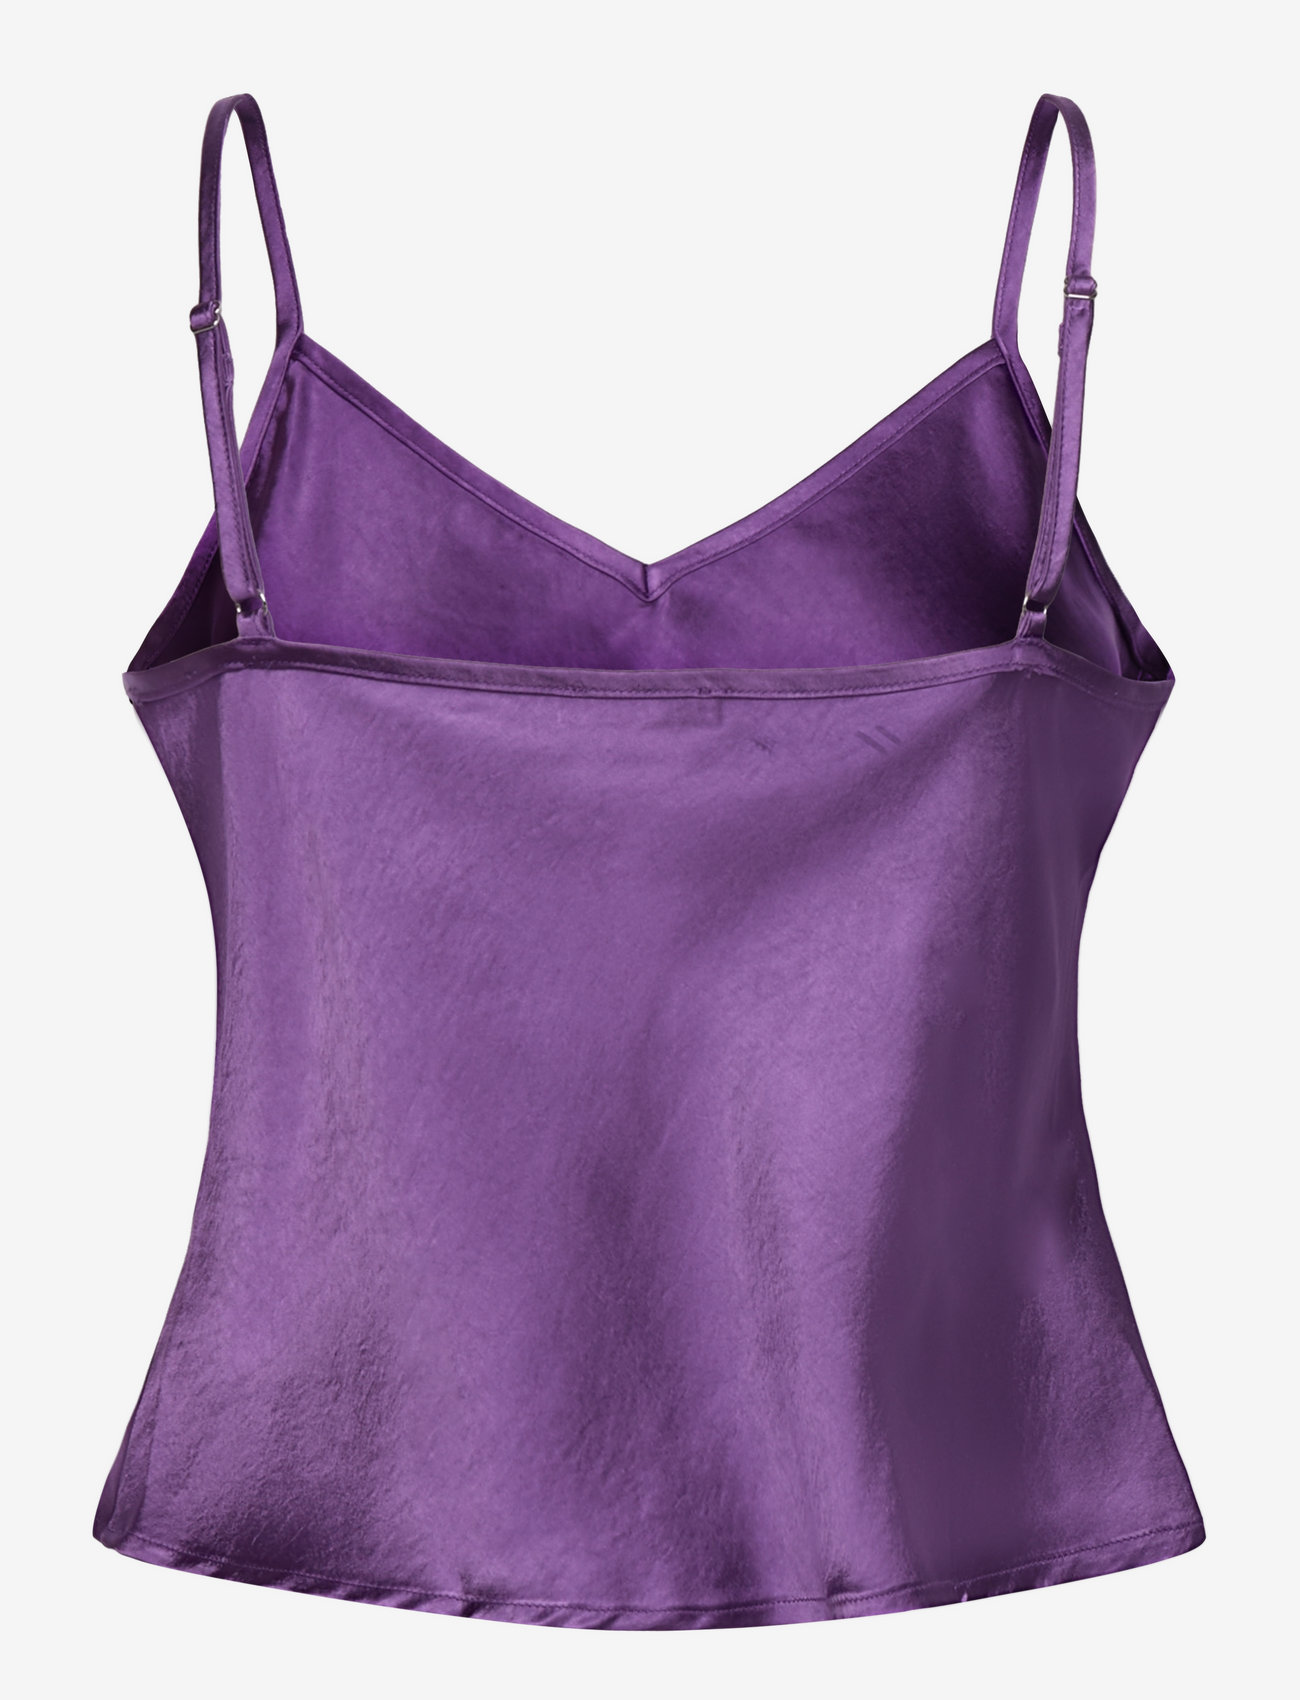 bzr - Satina Easy top - sleeveless blouses - royal purple - 1